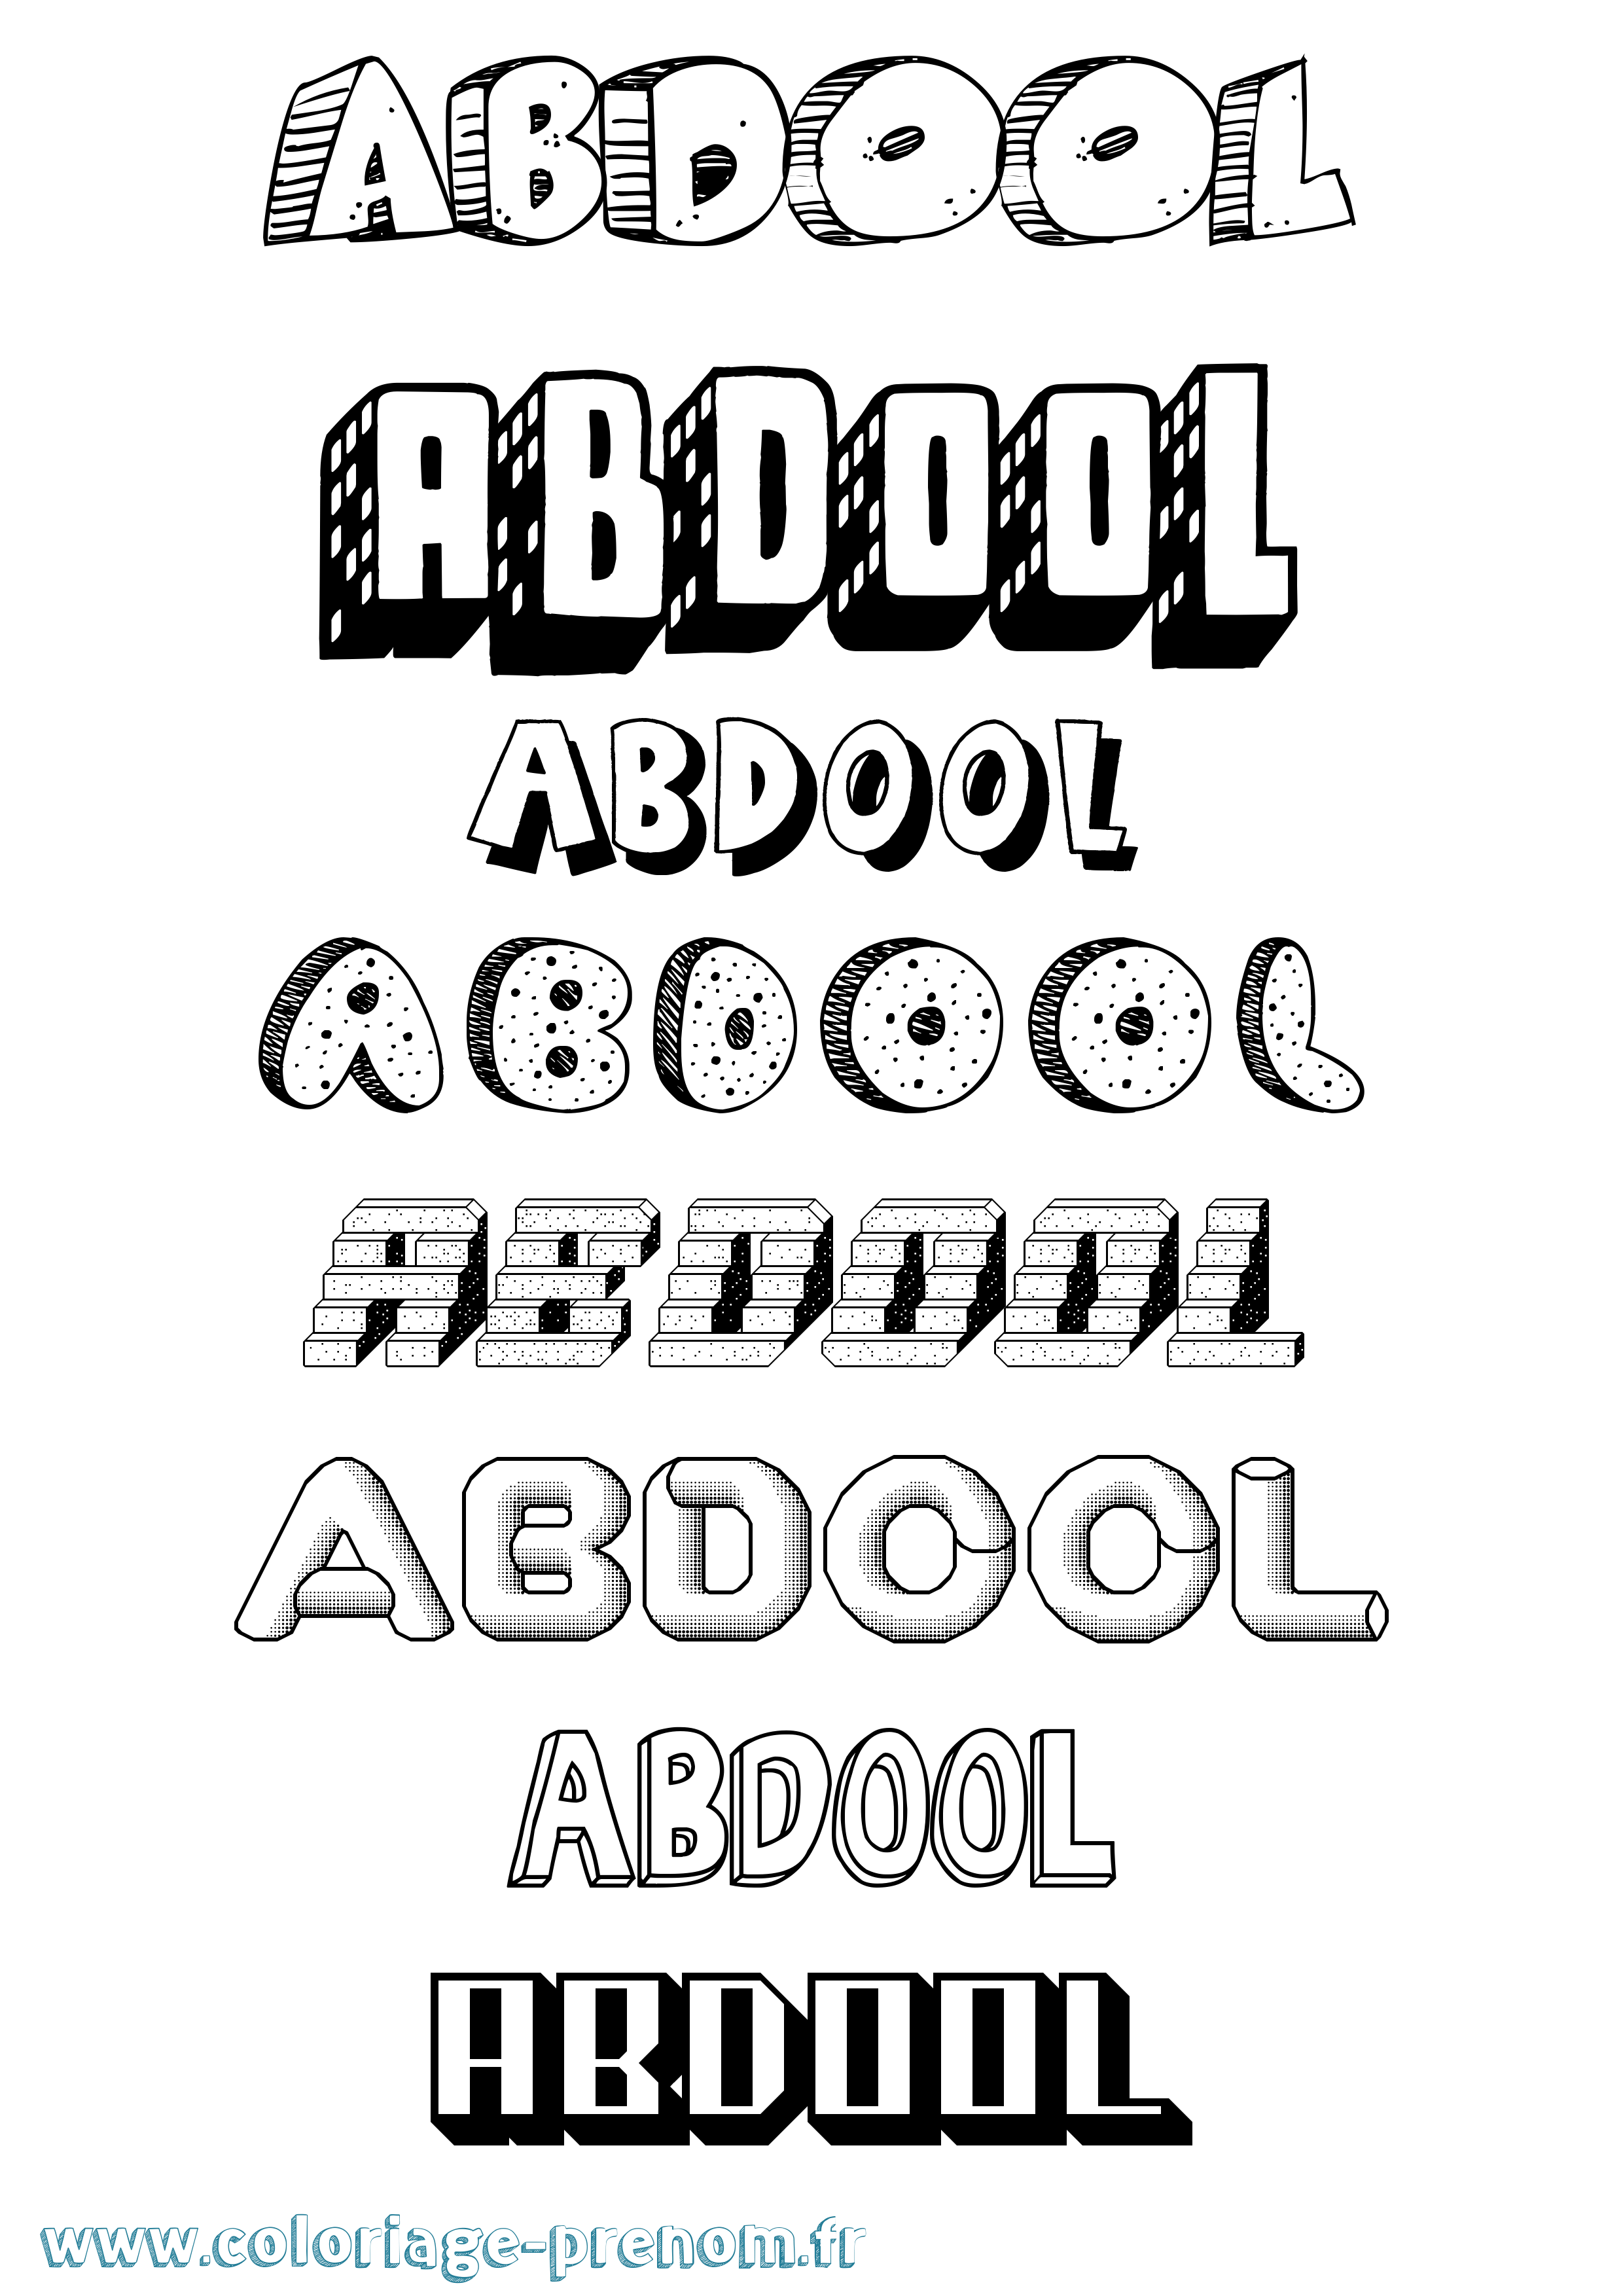 Coloriage prénom Abdool Effet 3D